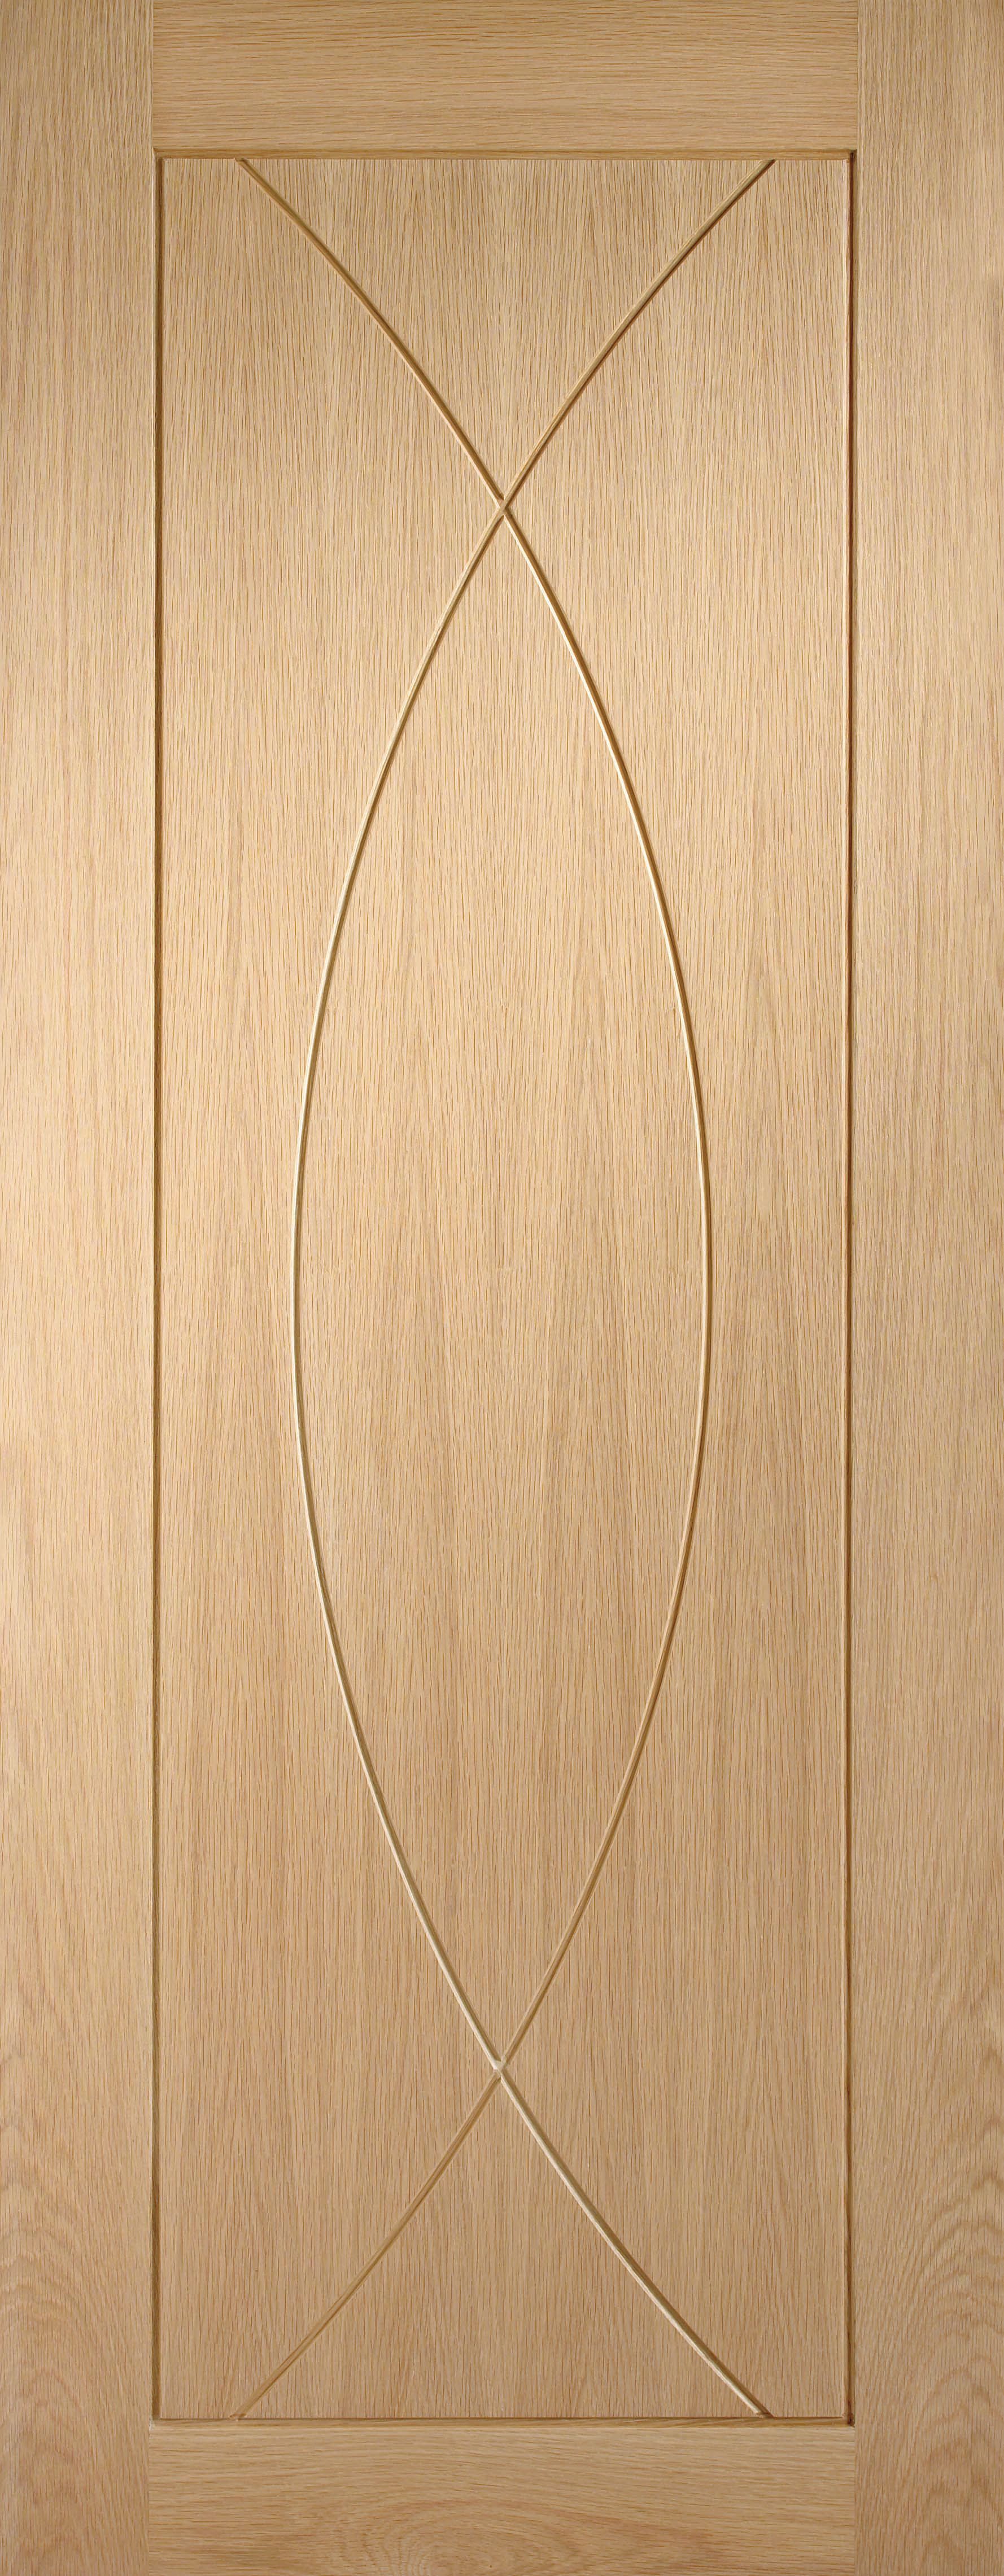 Image of XL Joinery Pesaro Oak Patterned Pre Finished Internal Door - 1981 x 762mm